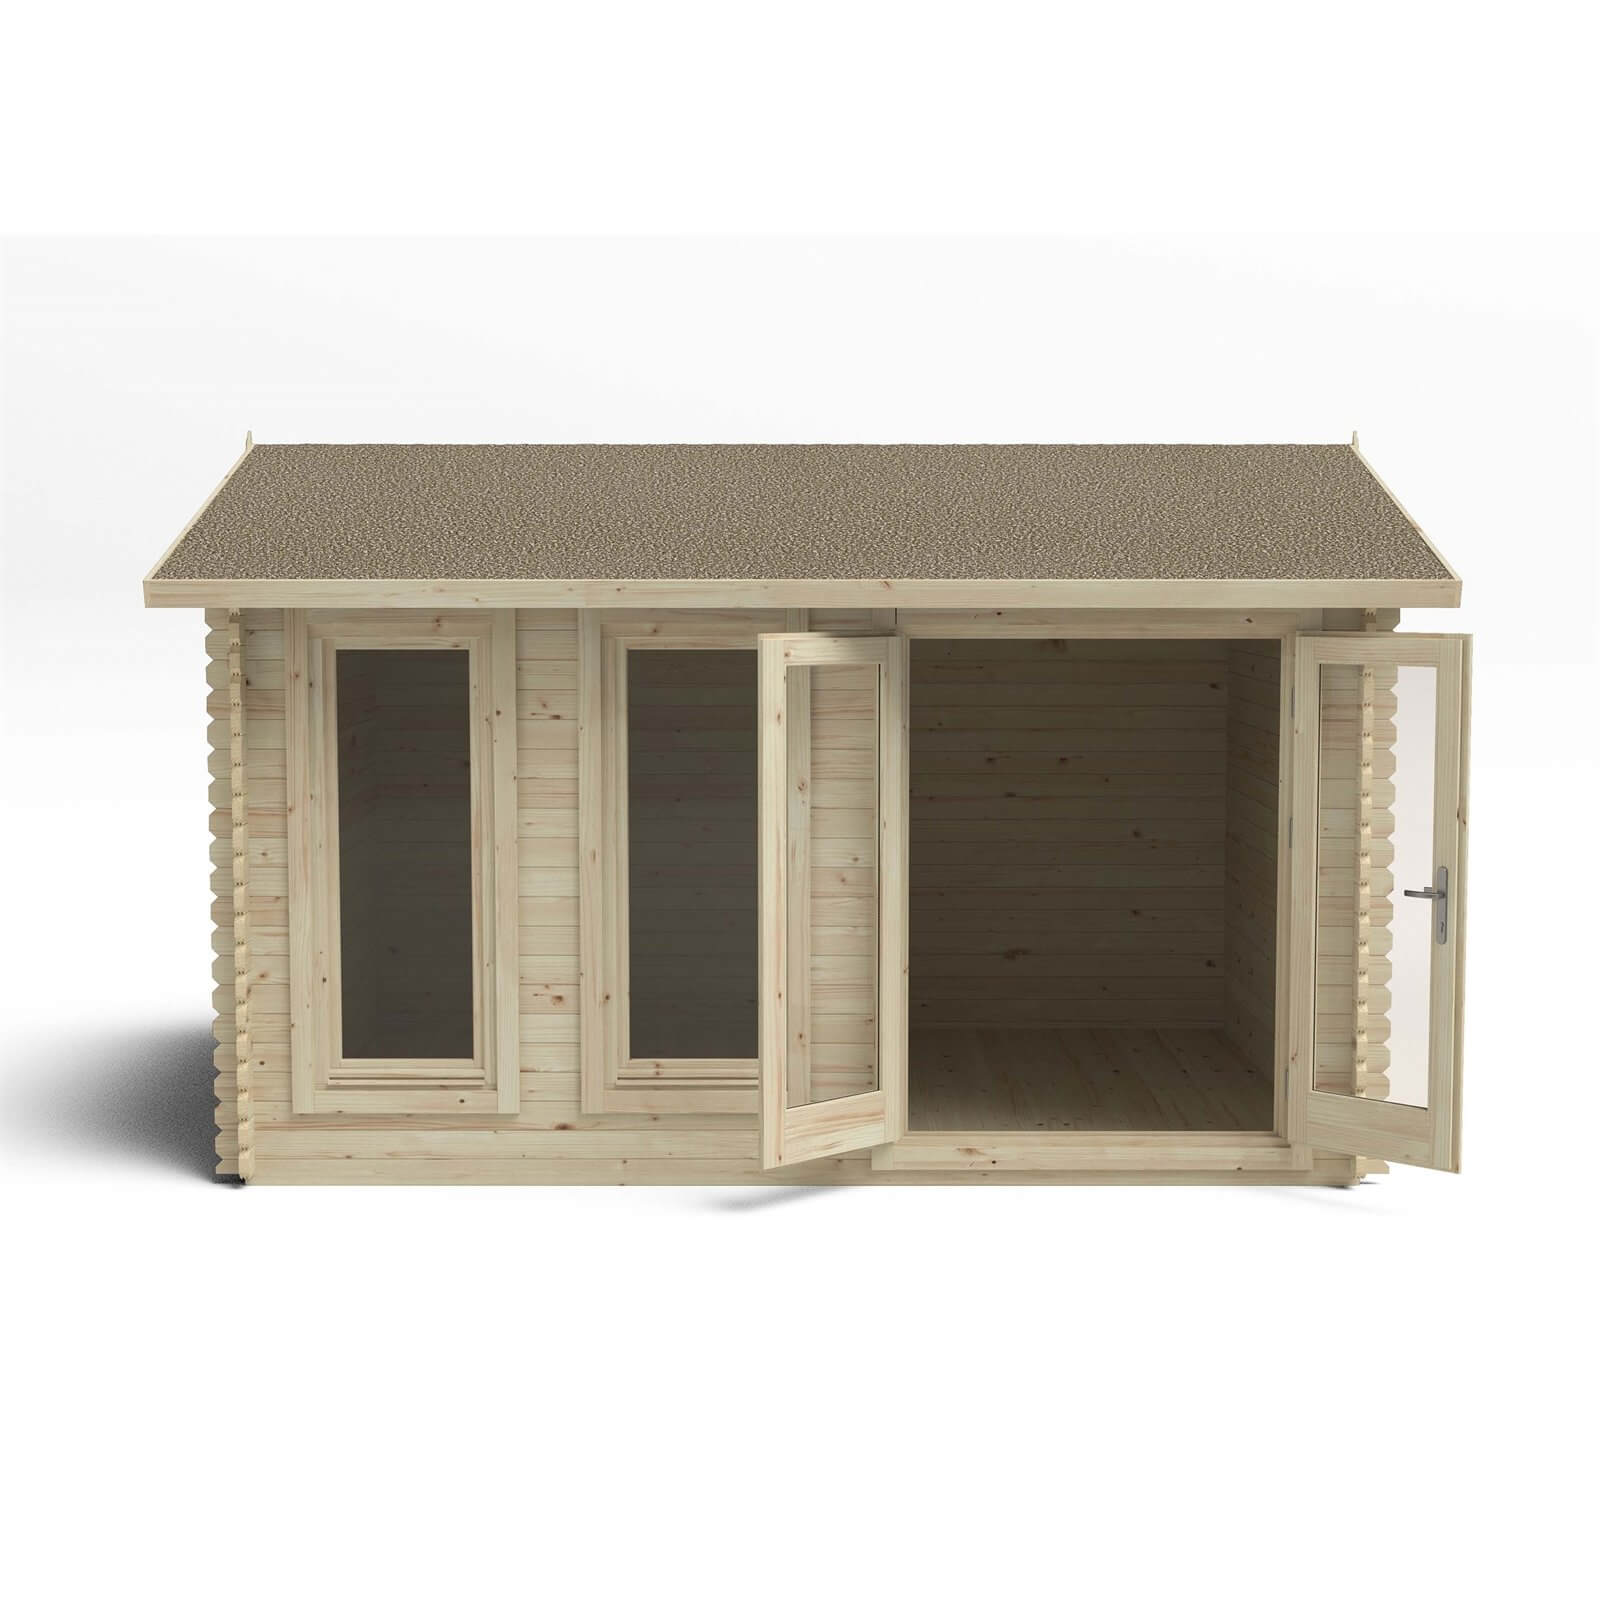 Chiltern 4.0m x 3.0m Log Cabin Single Glazed 24kg Felt, No Underlay